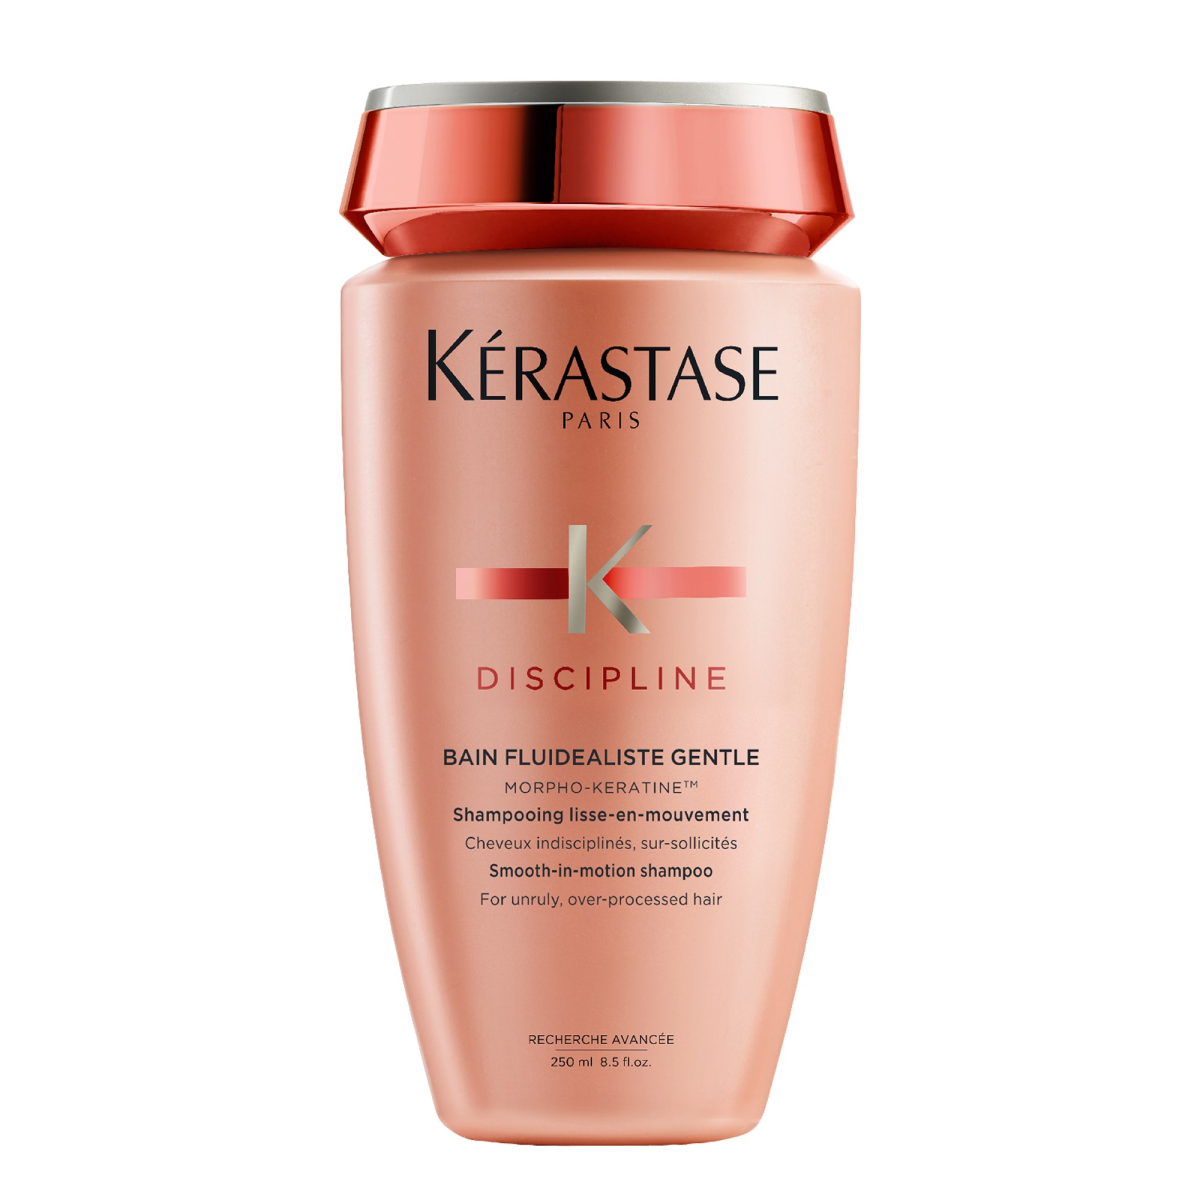 KÉRASTASE - DISCIPLINE - BAIN FLUIDEALISTE GENTLE (250ml) Shampoo anticrespo